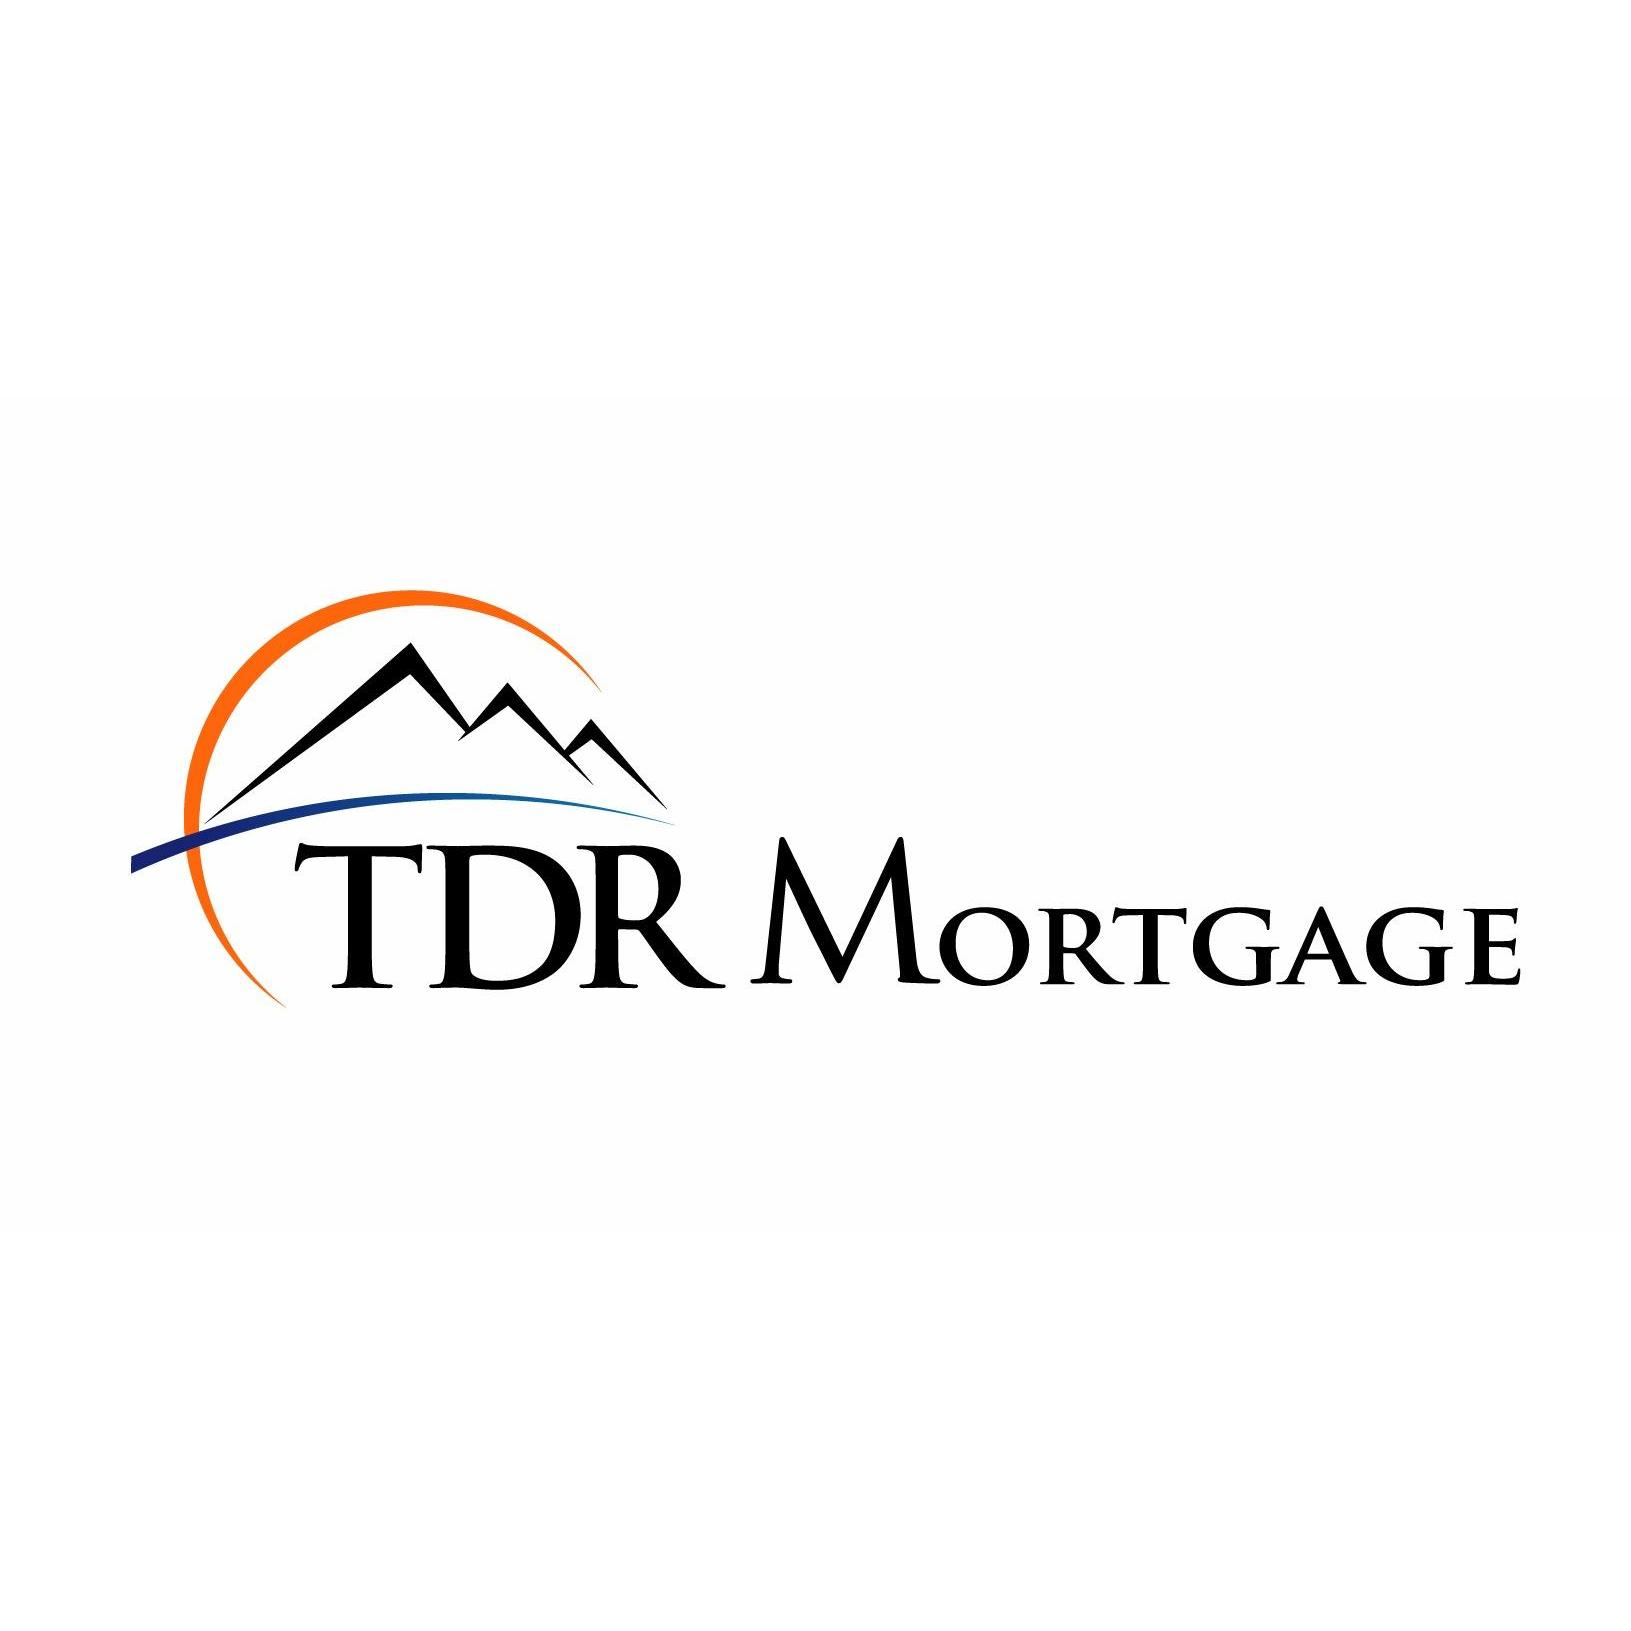 TDR Mortgage & Real Estate - Teresa Tims